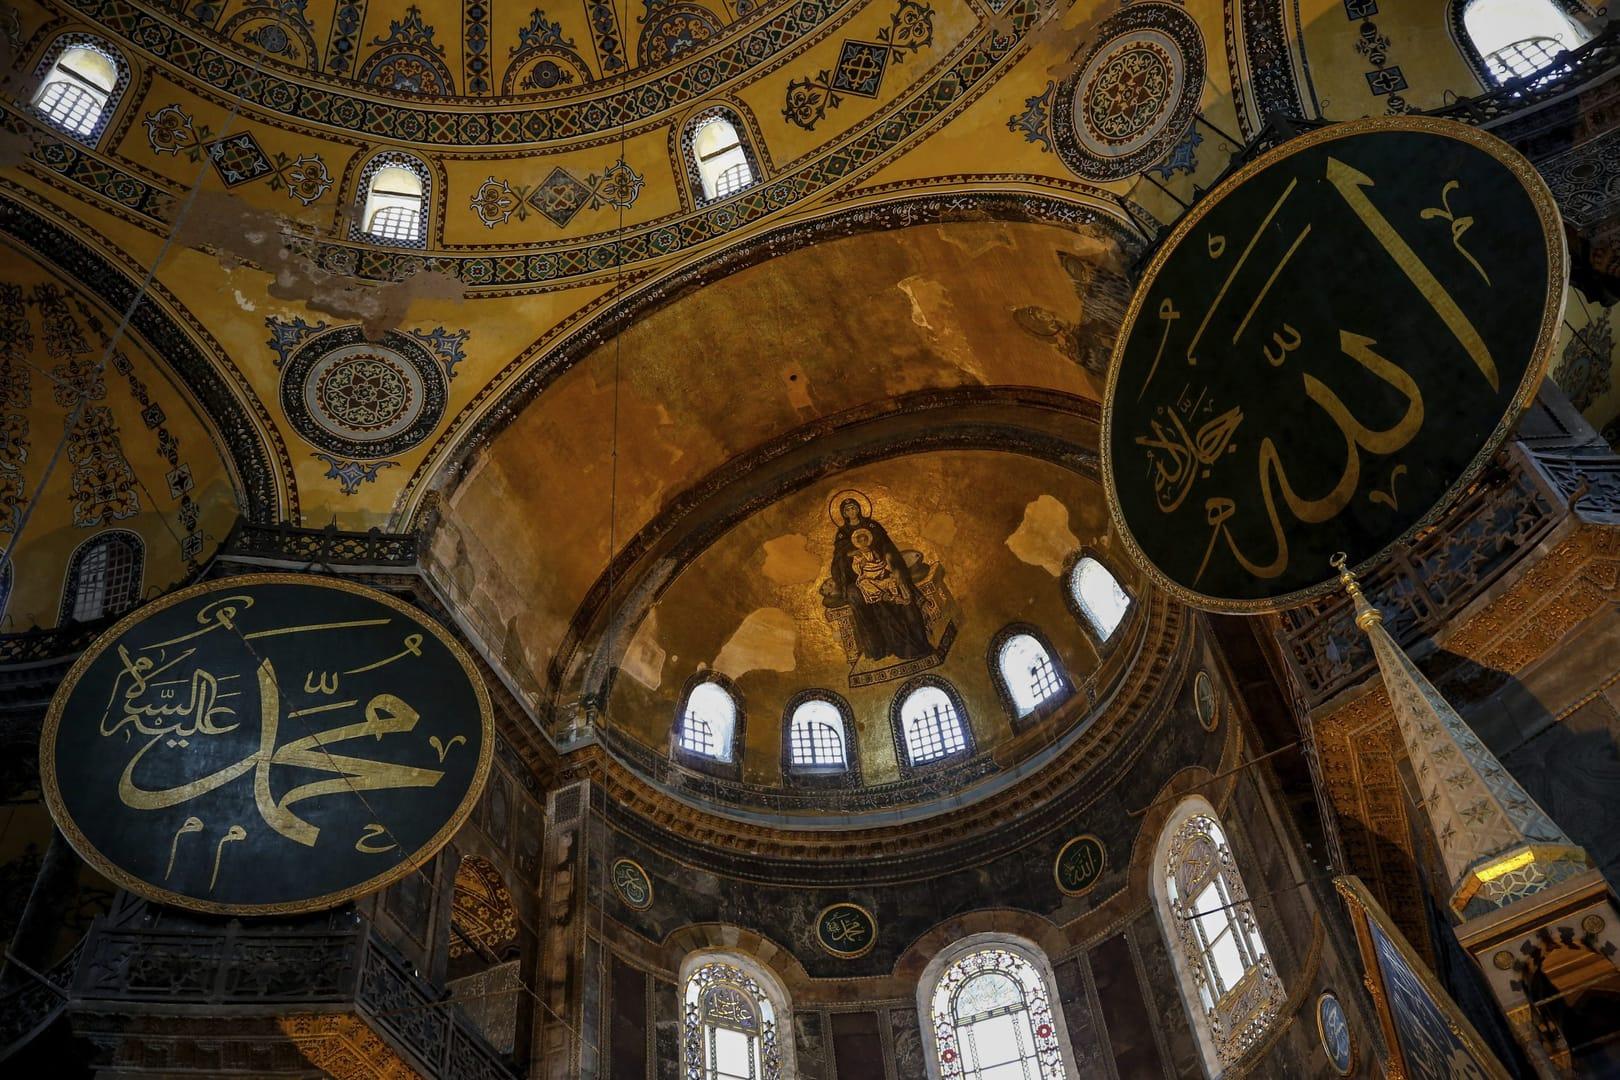 Turkey reverts Hagia Sophia to mosque despite Orthodox pleas